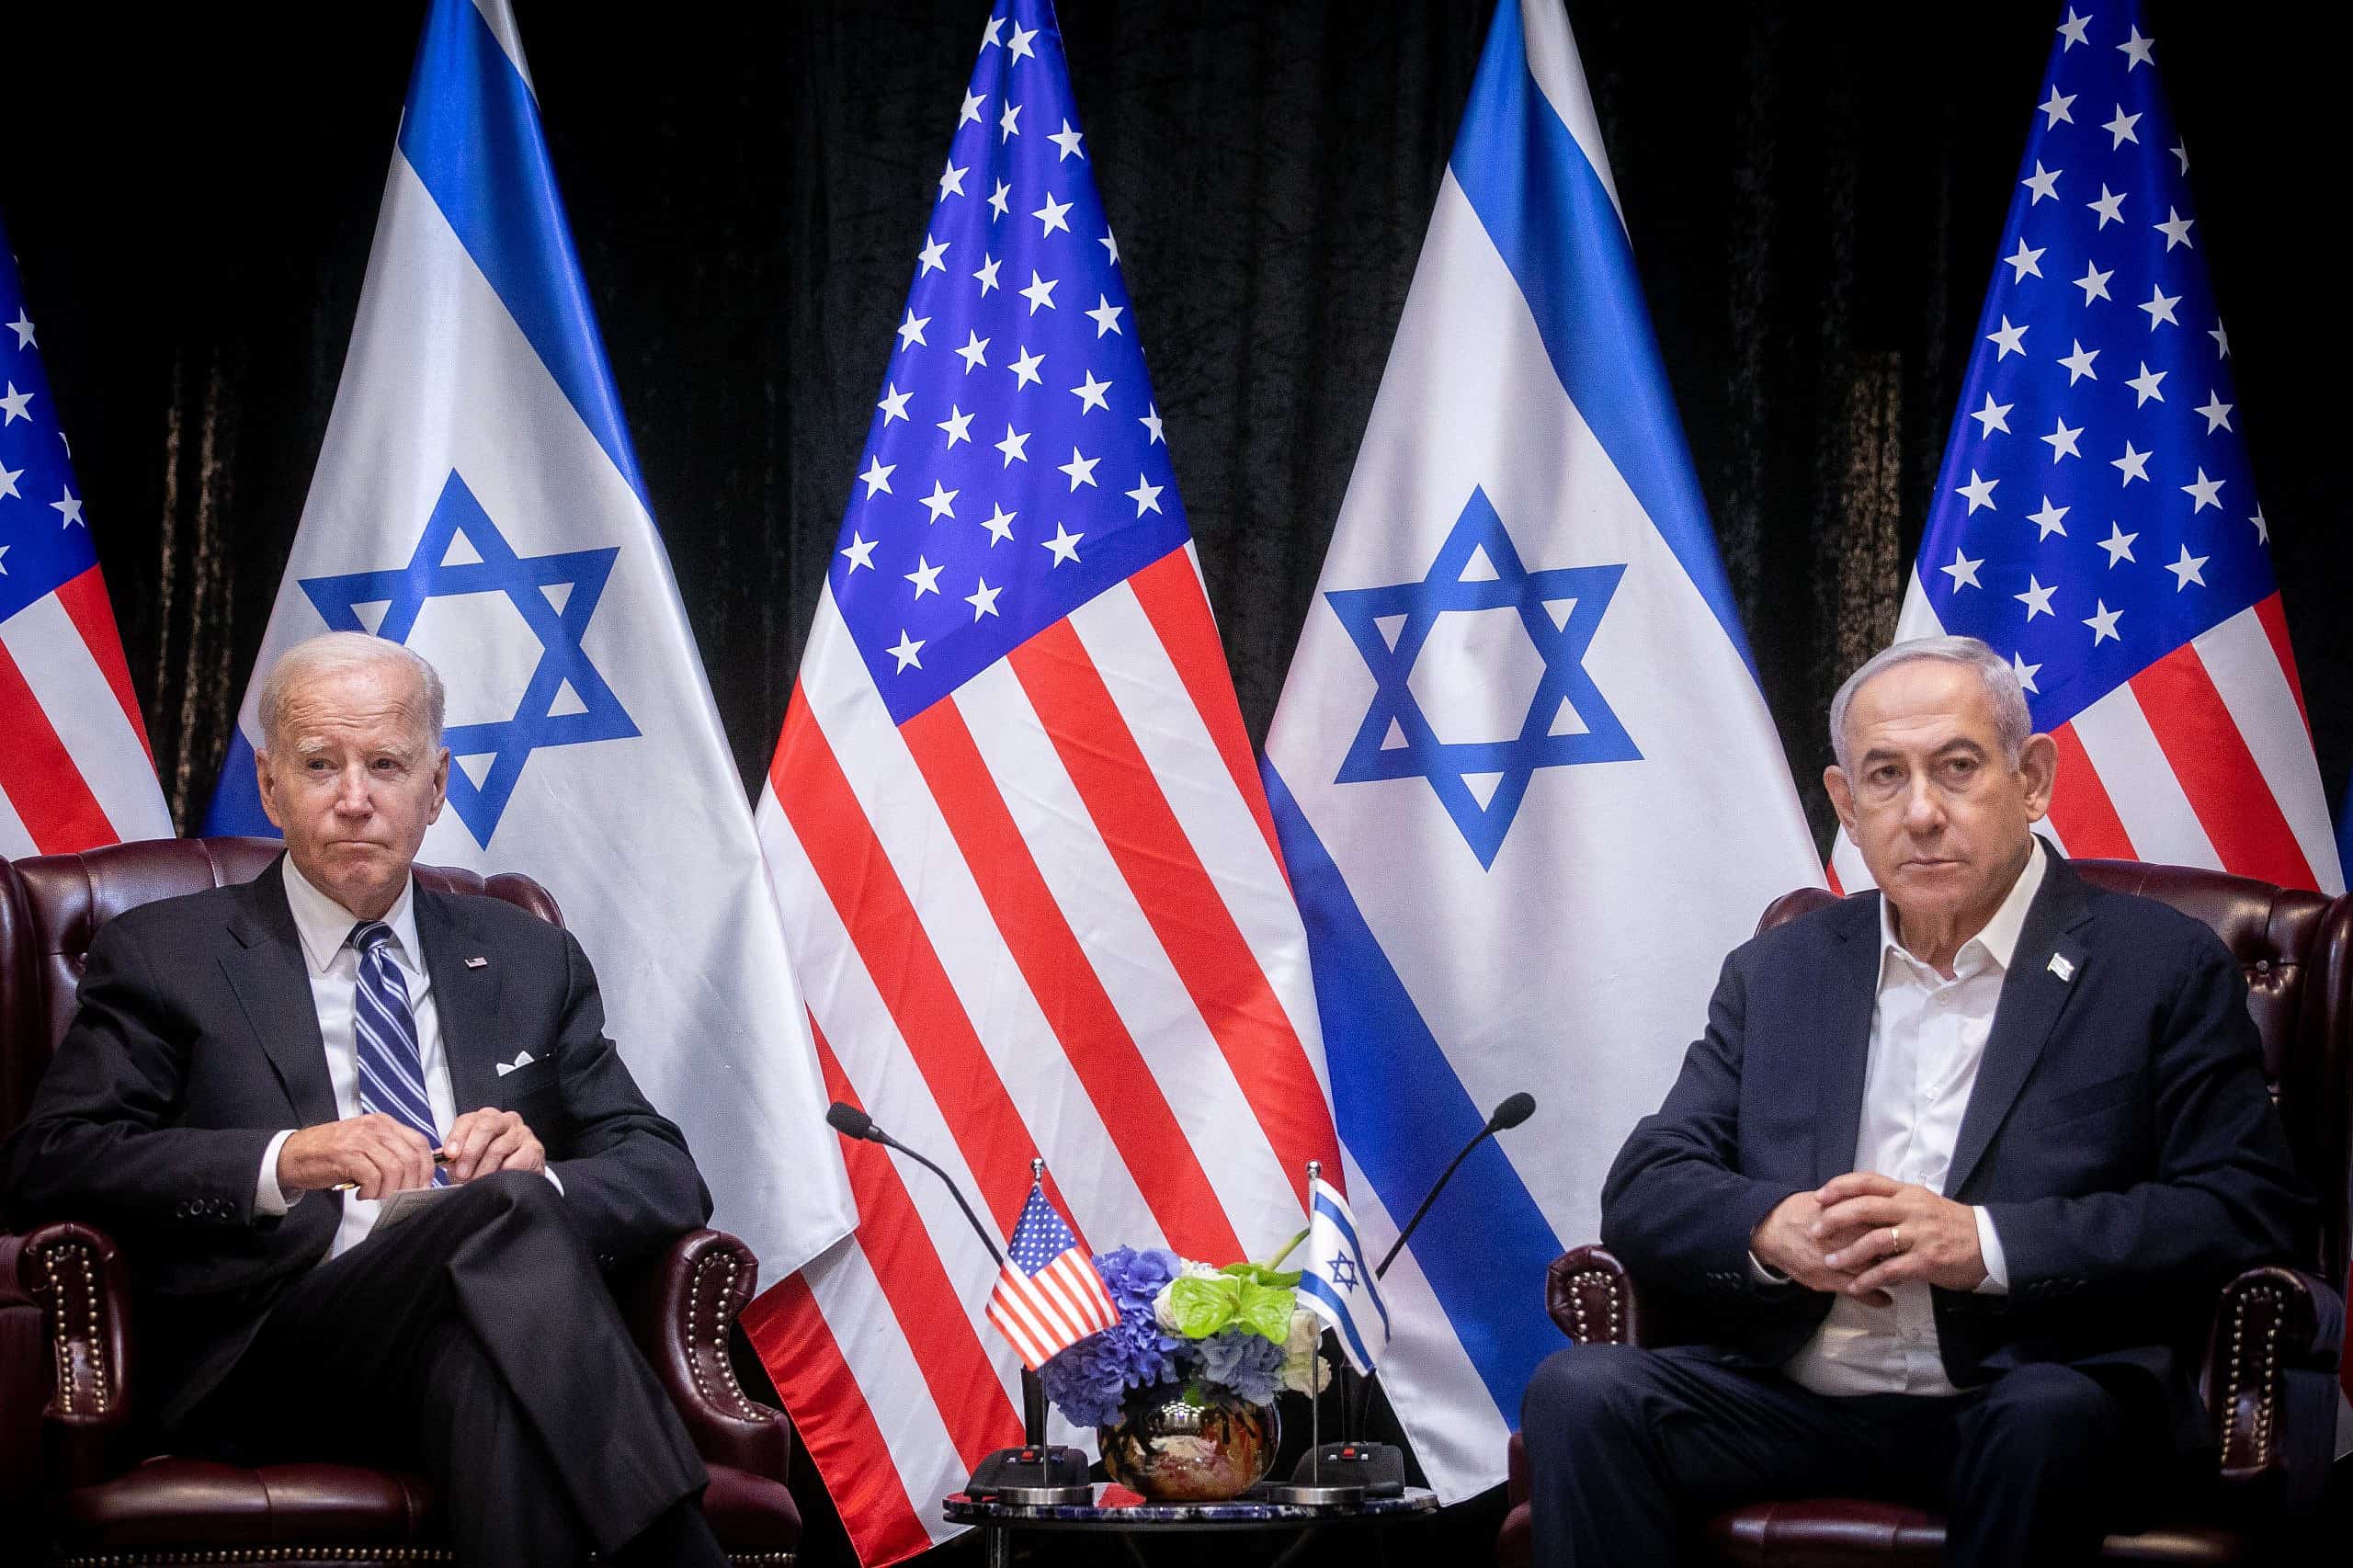 Gaza policy will change if Israel doesn’t meet US conditions, Biden warns Netanyahu